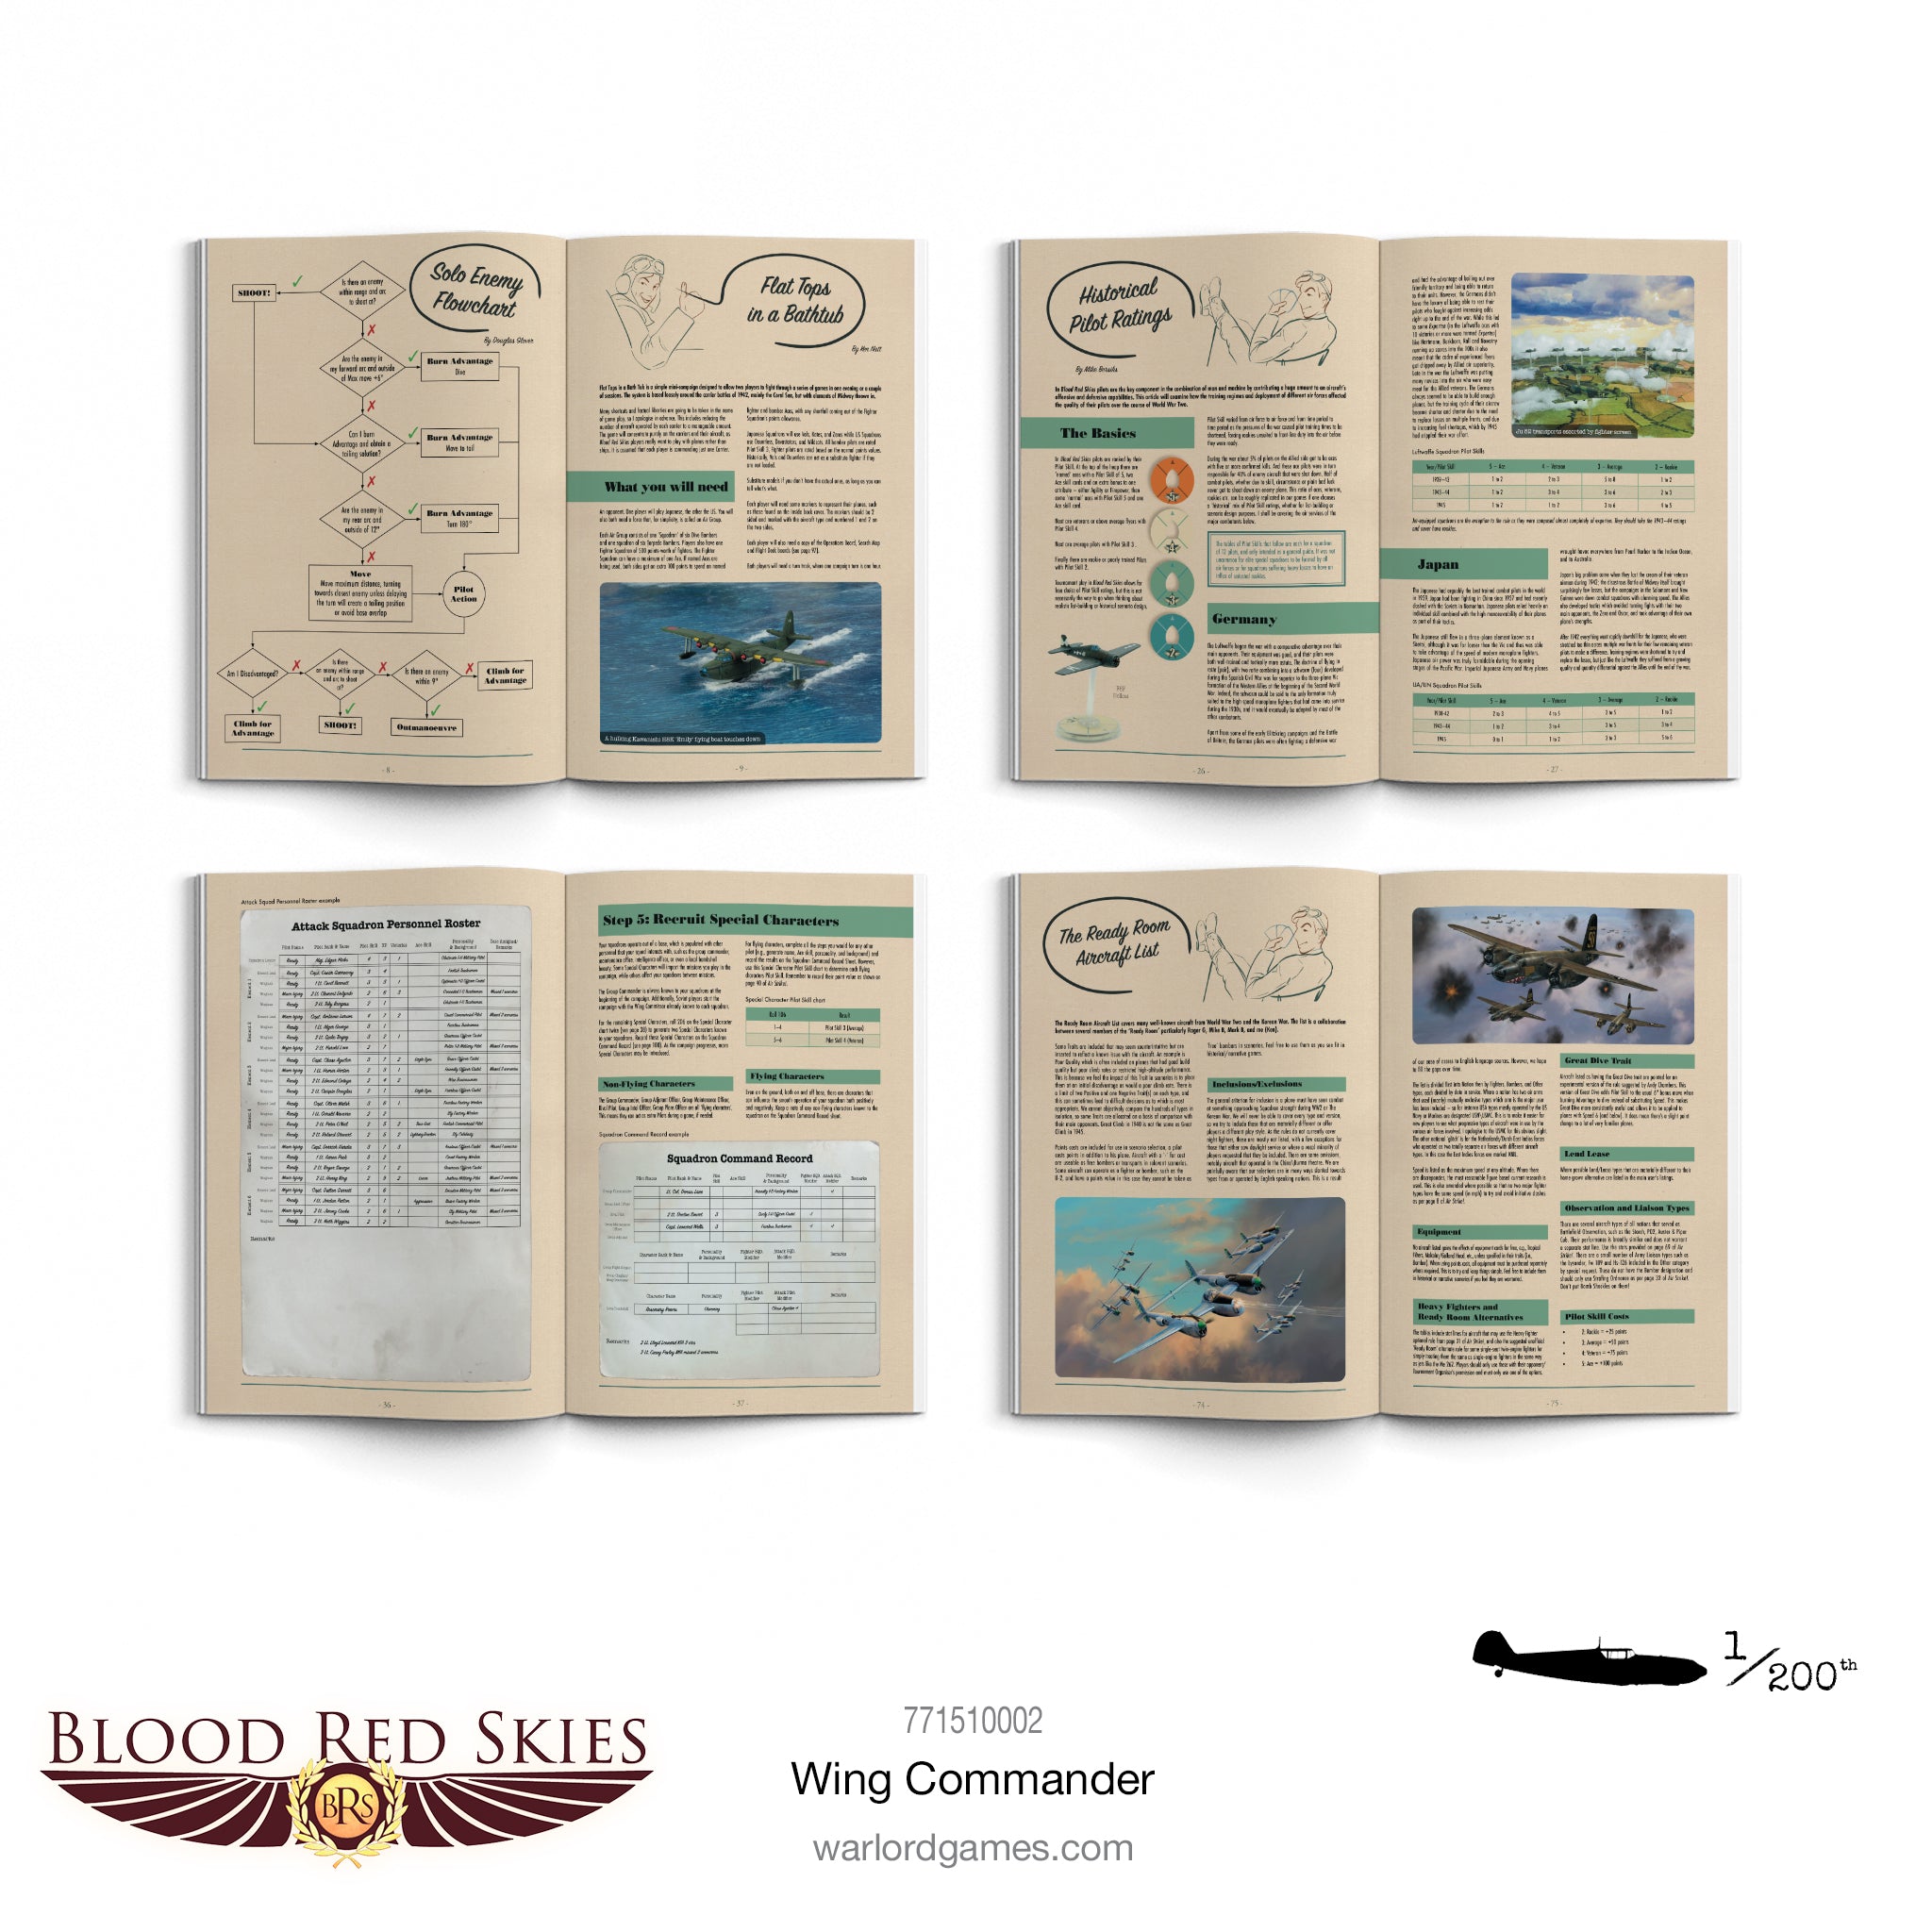 Blood Red Skies: Wing Commander compendium